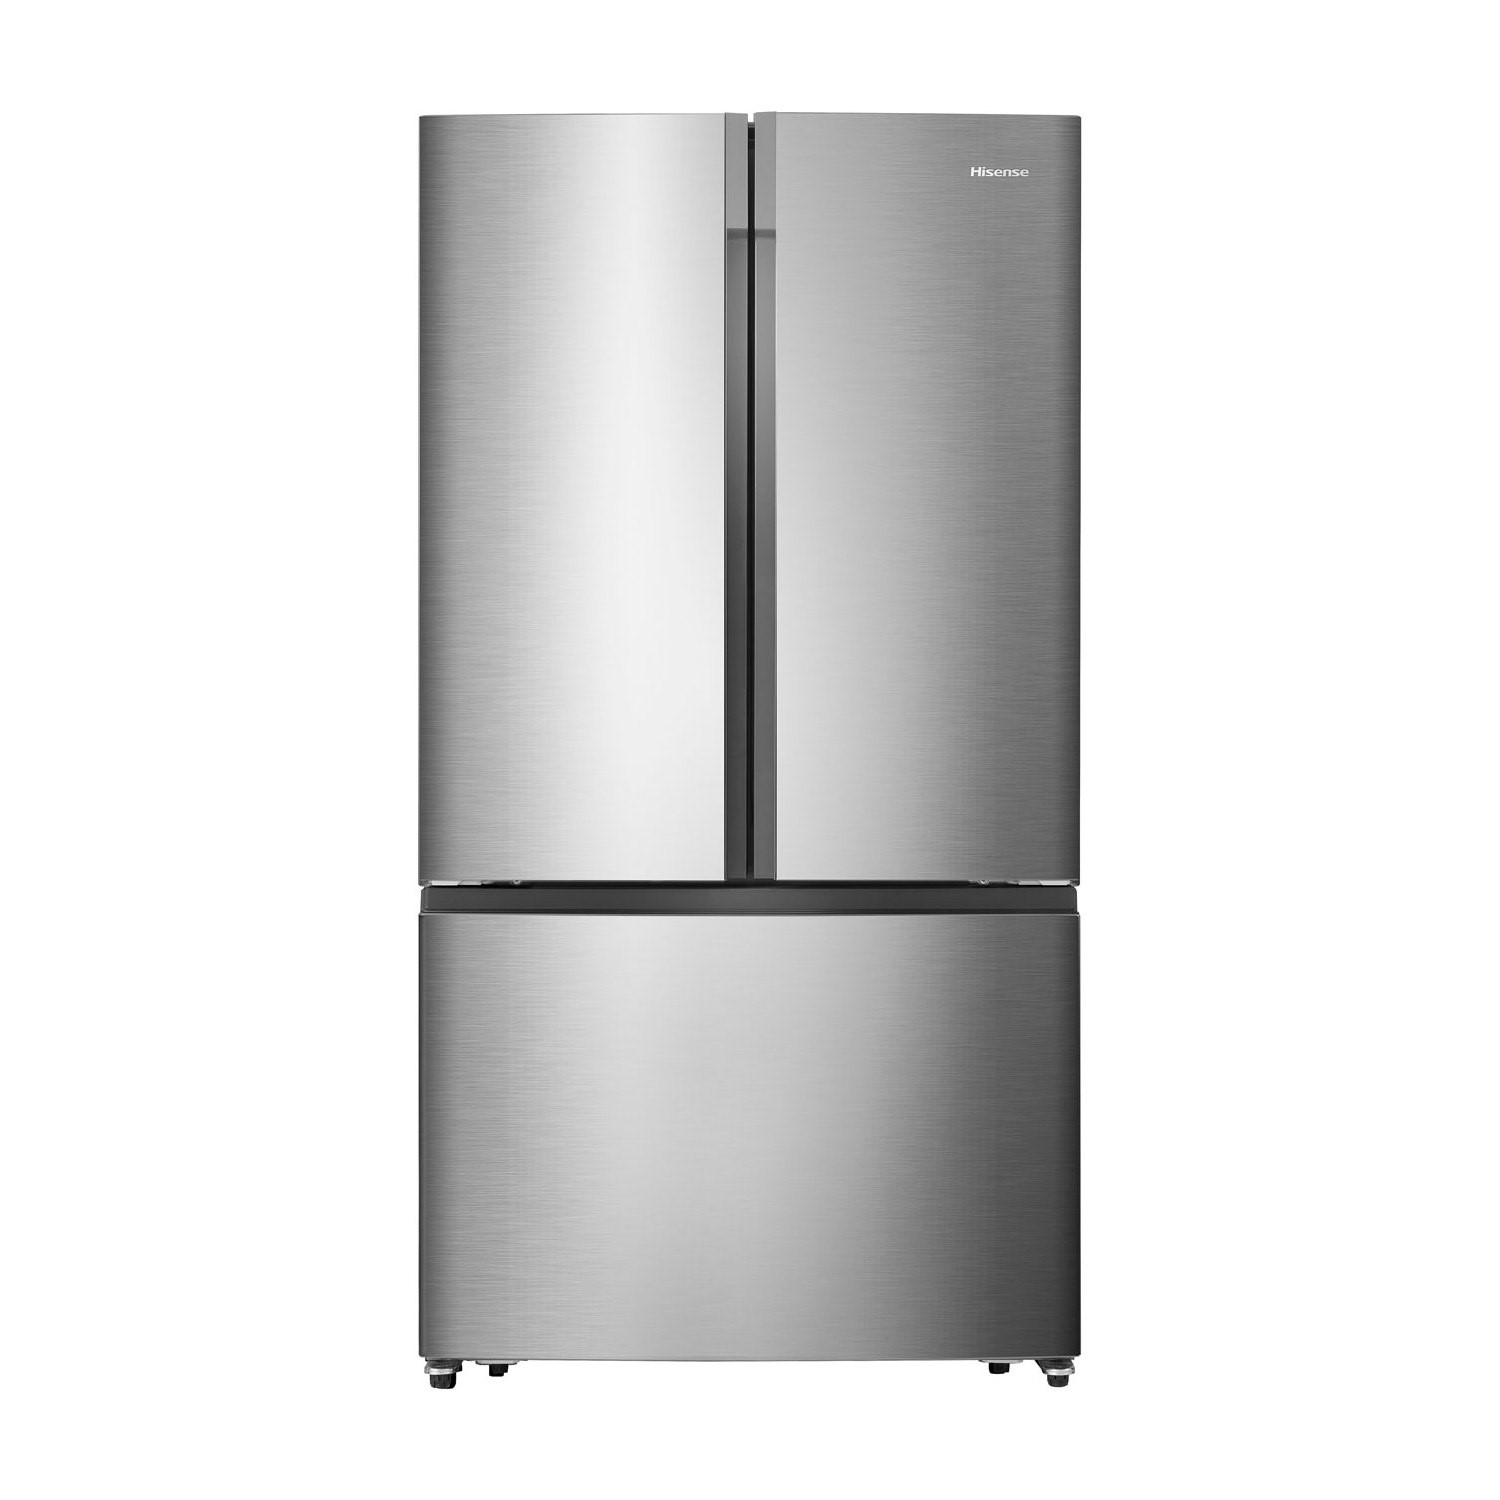 19++ Hisense rf715n4as1 french door style american fridge freezer information